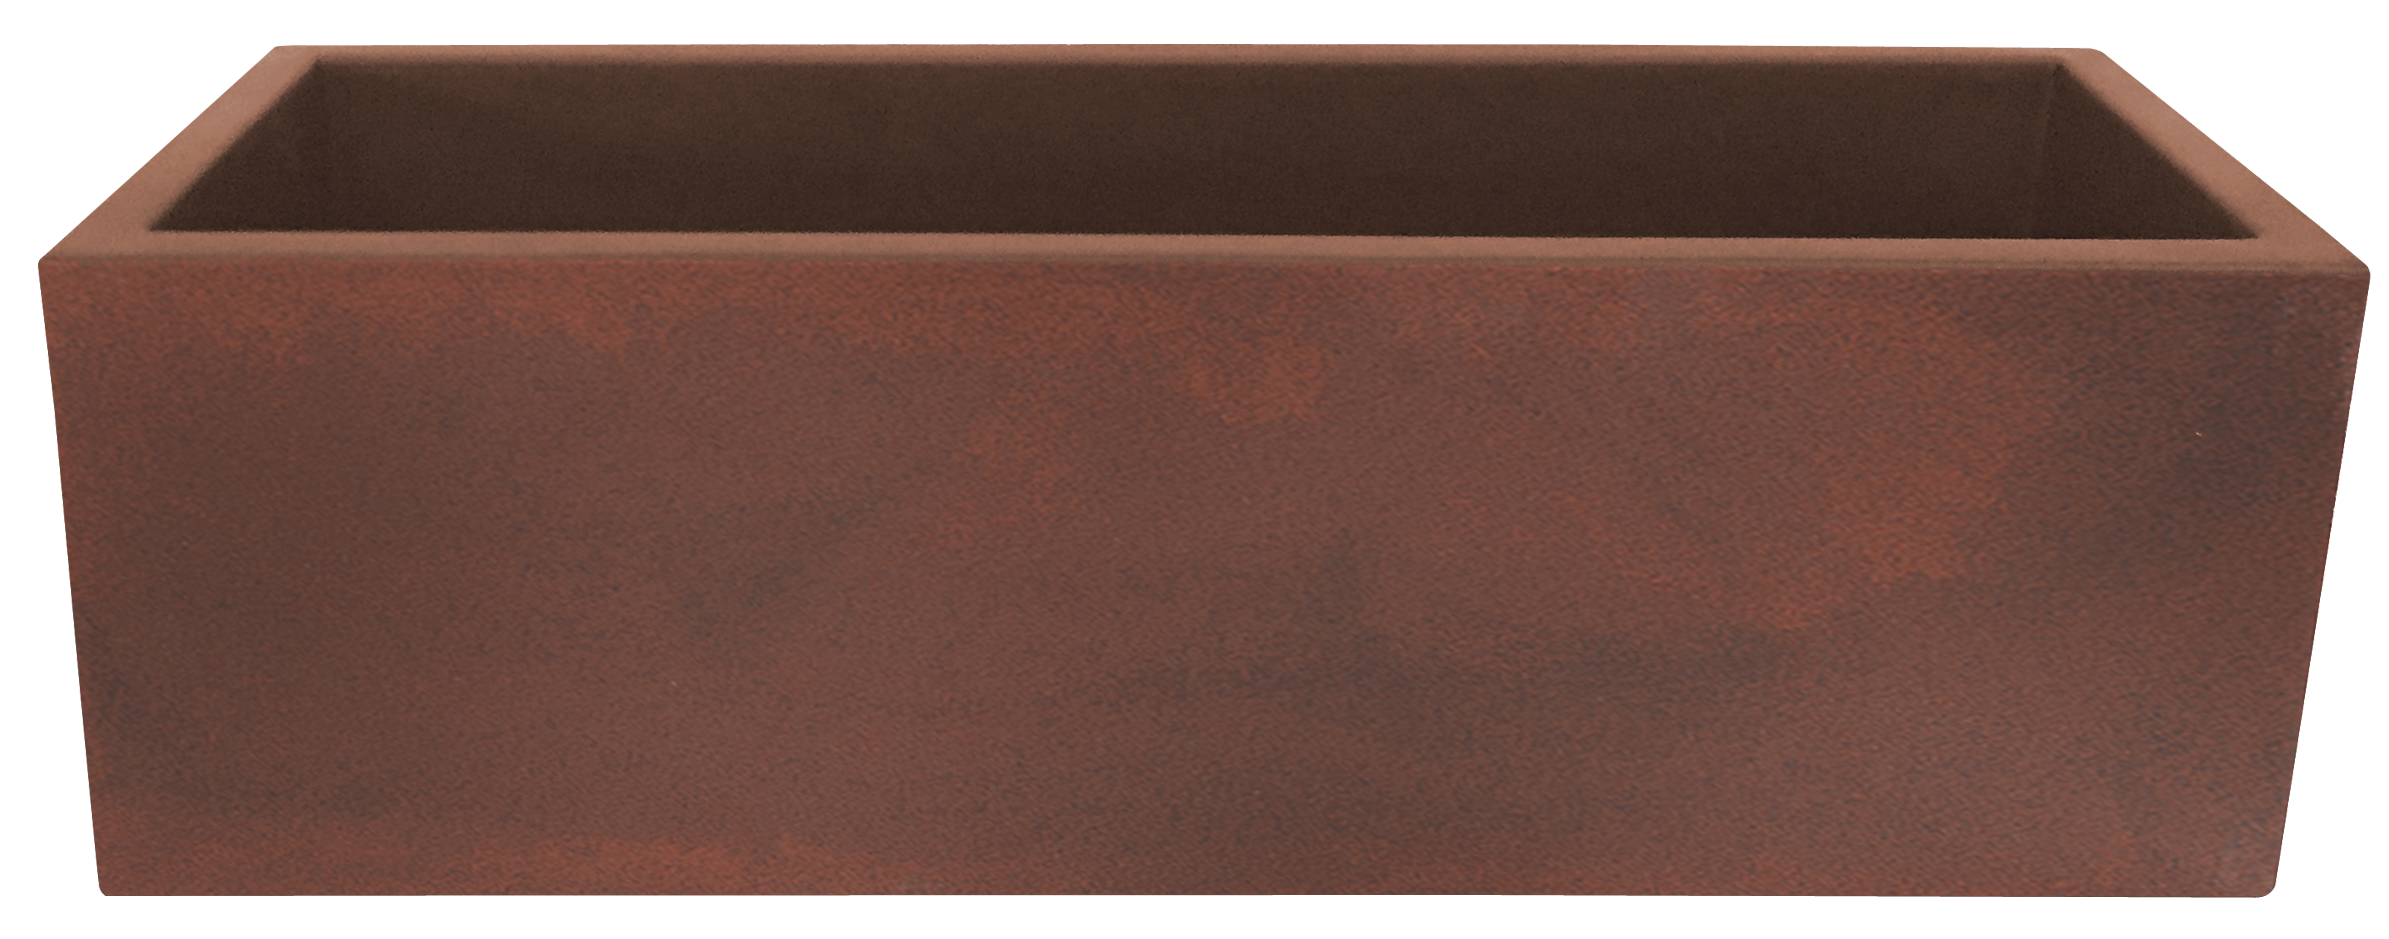 Maceta de polietileno jara marrón 100x35 cm